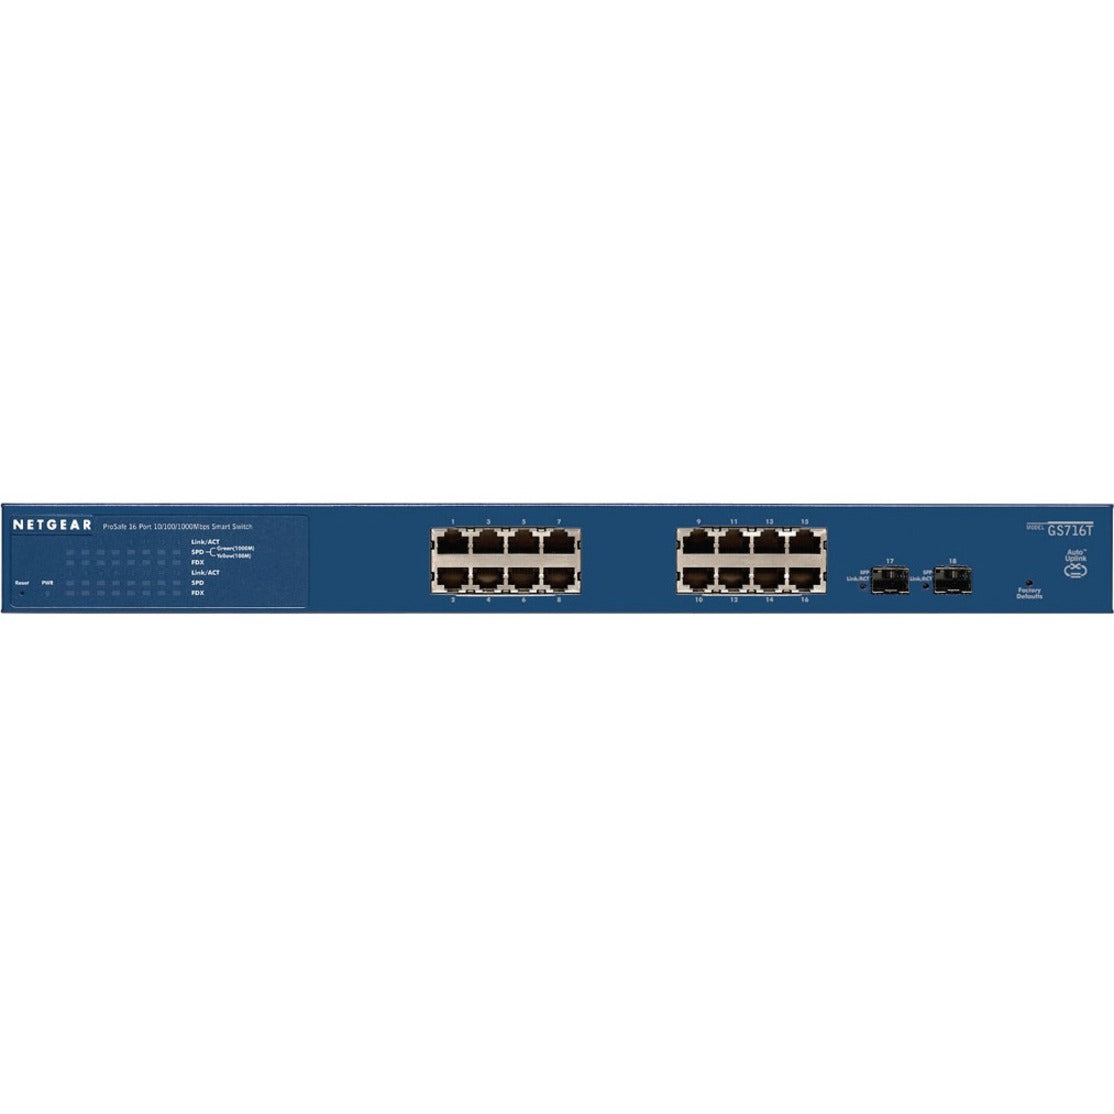 NETGEAR GS716T-300NAS ProSafe 16-Port Smart Managed Pro Switch, Gigabit Ethernet, Rack-mountable